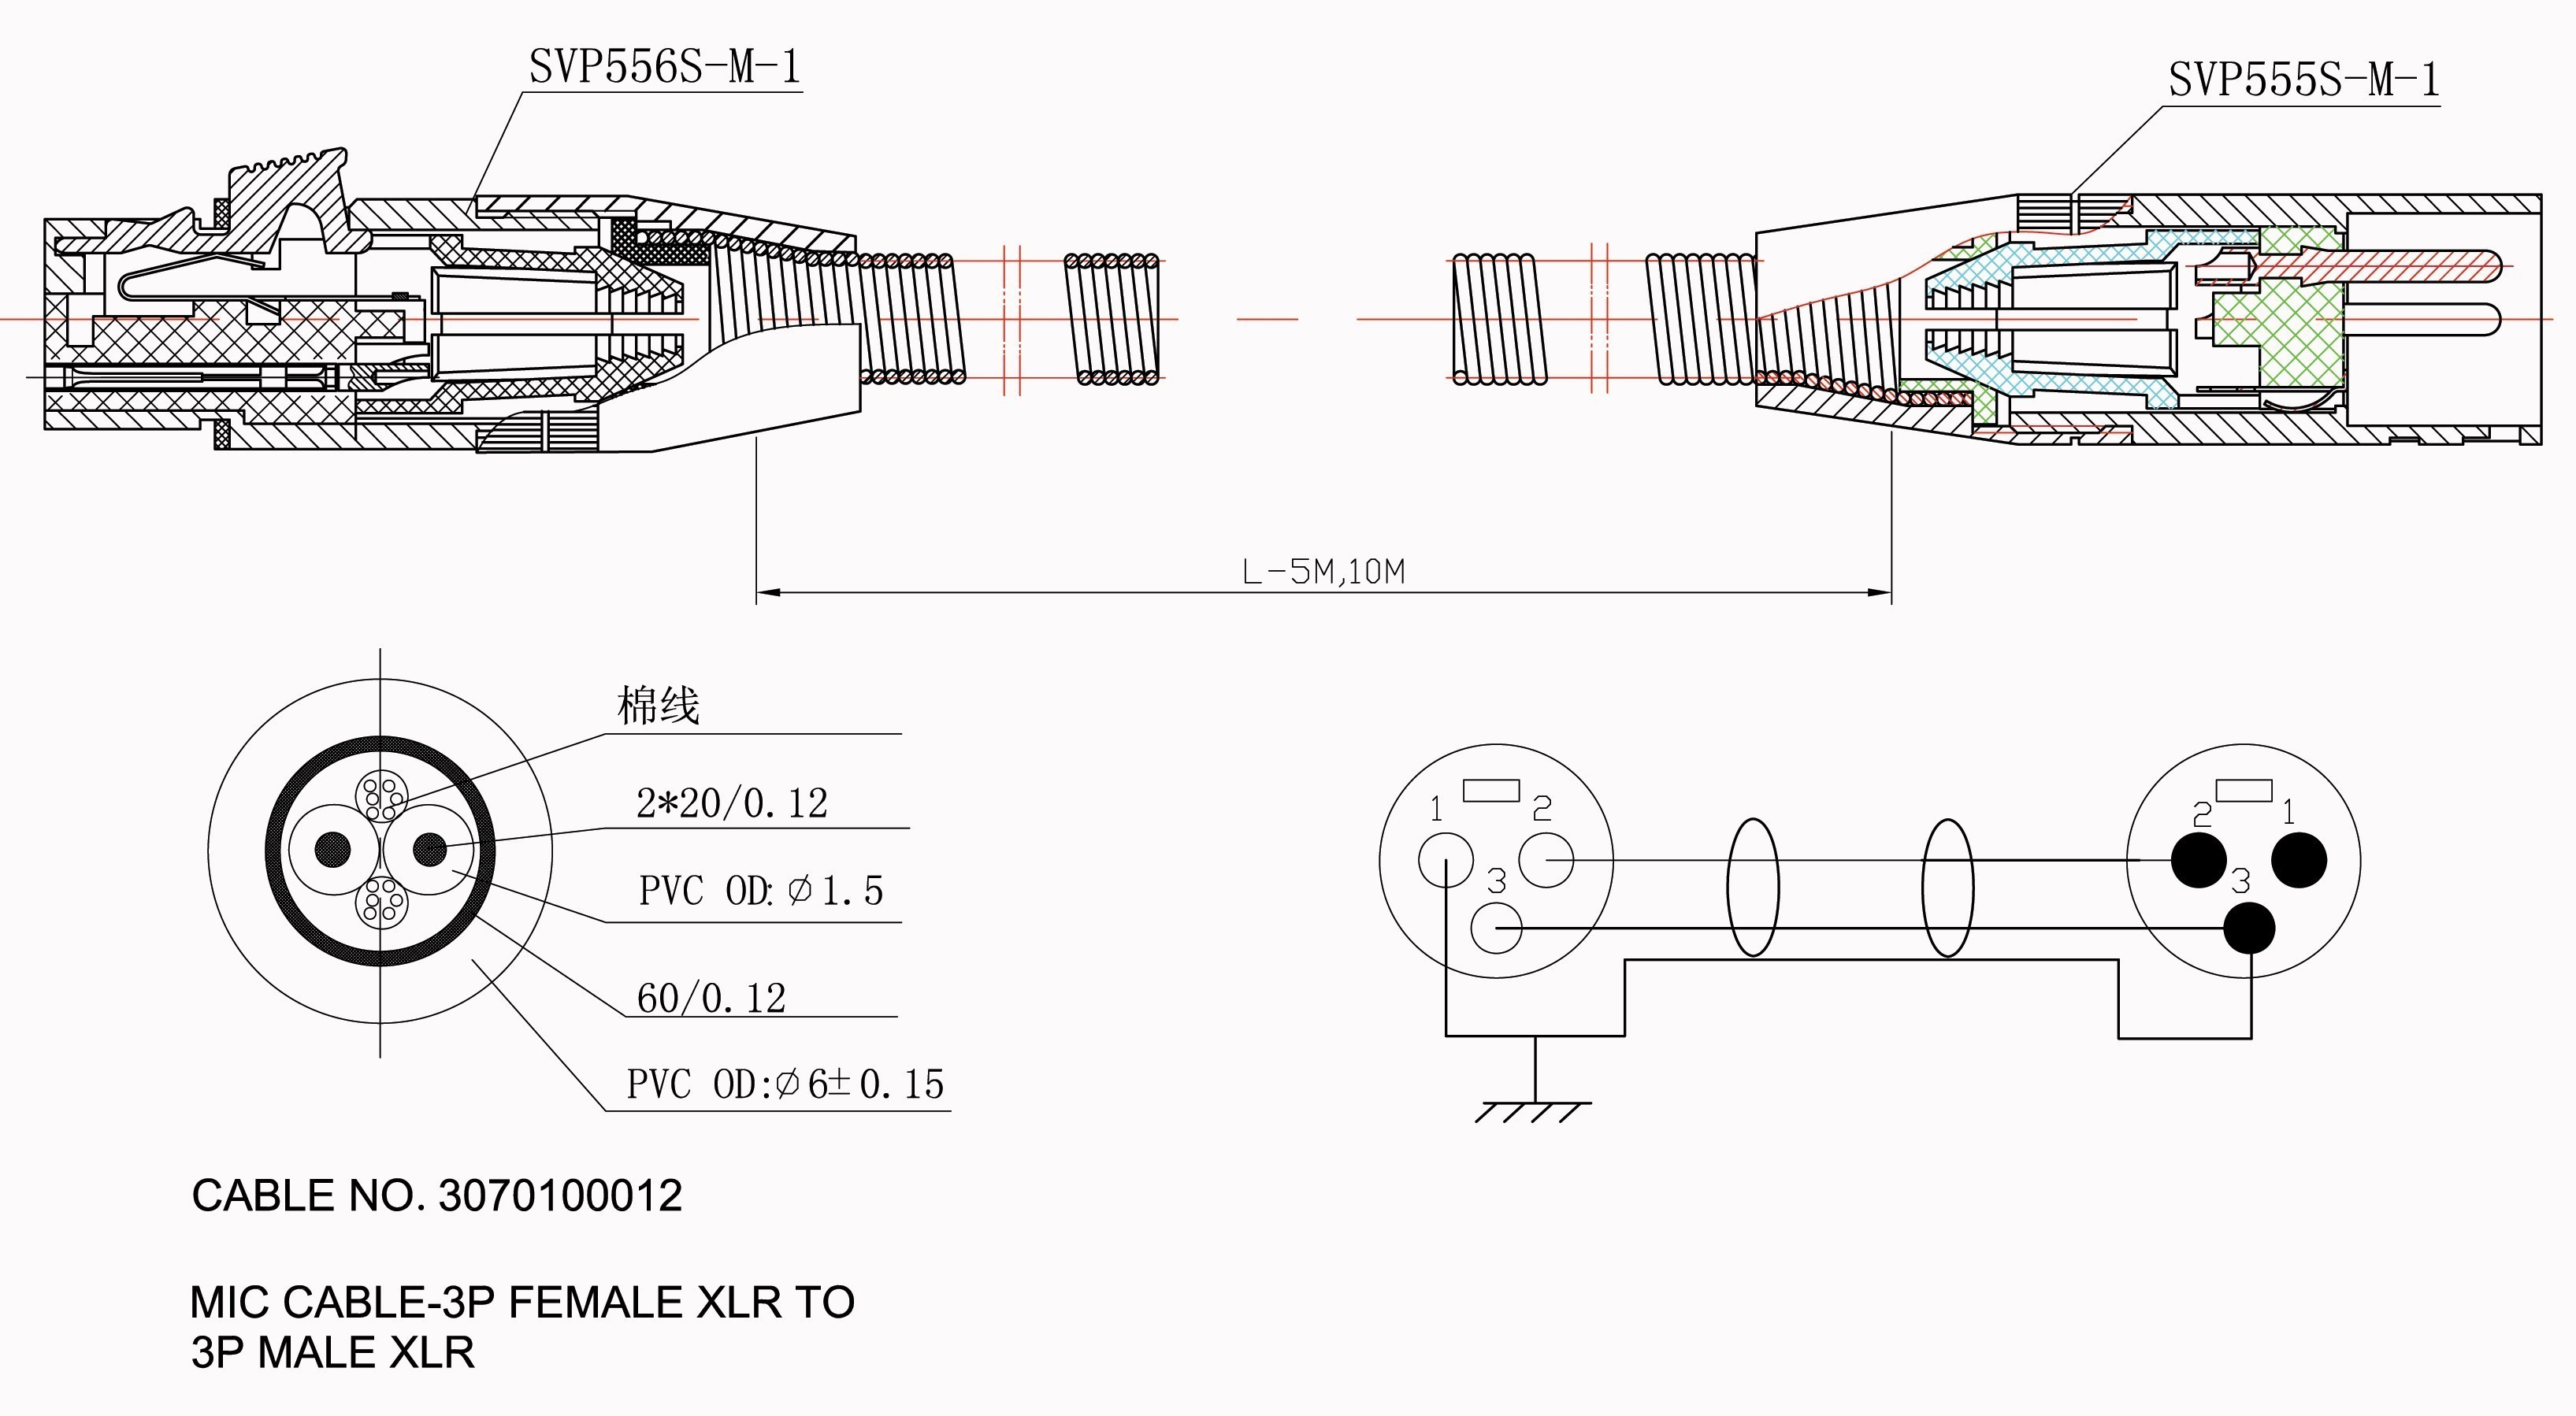 Remote Control Car Diagram Rc 10 Wiring Diagram Wiring Diagram Strategy Design Plan • Of Remote Control Car Diagram